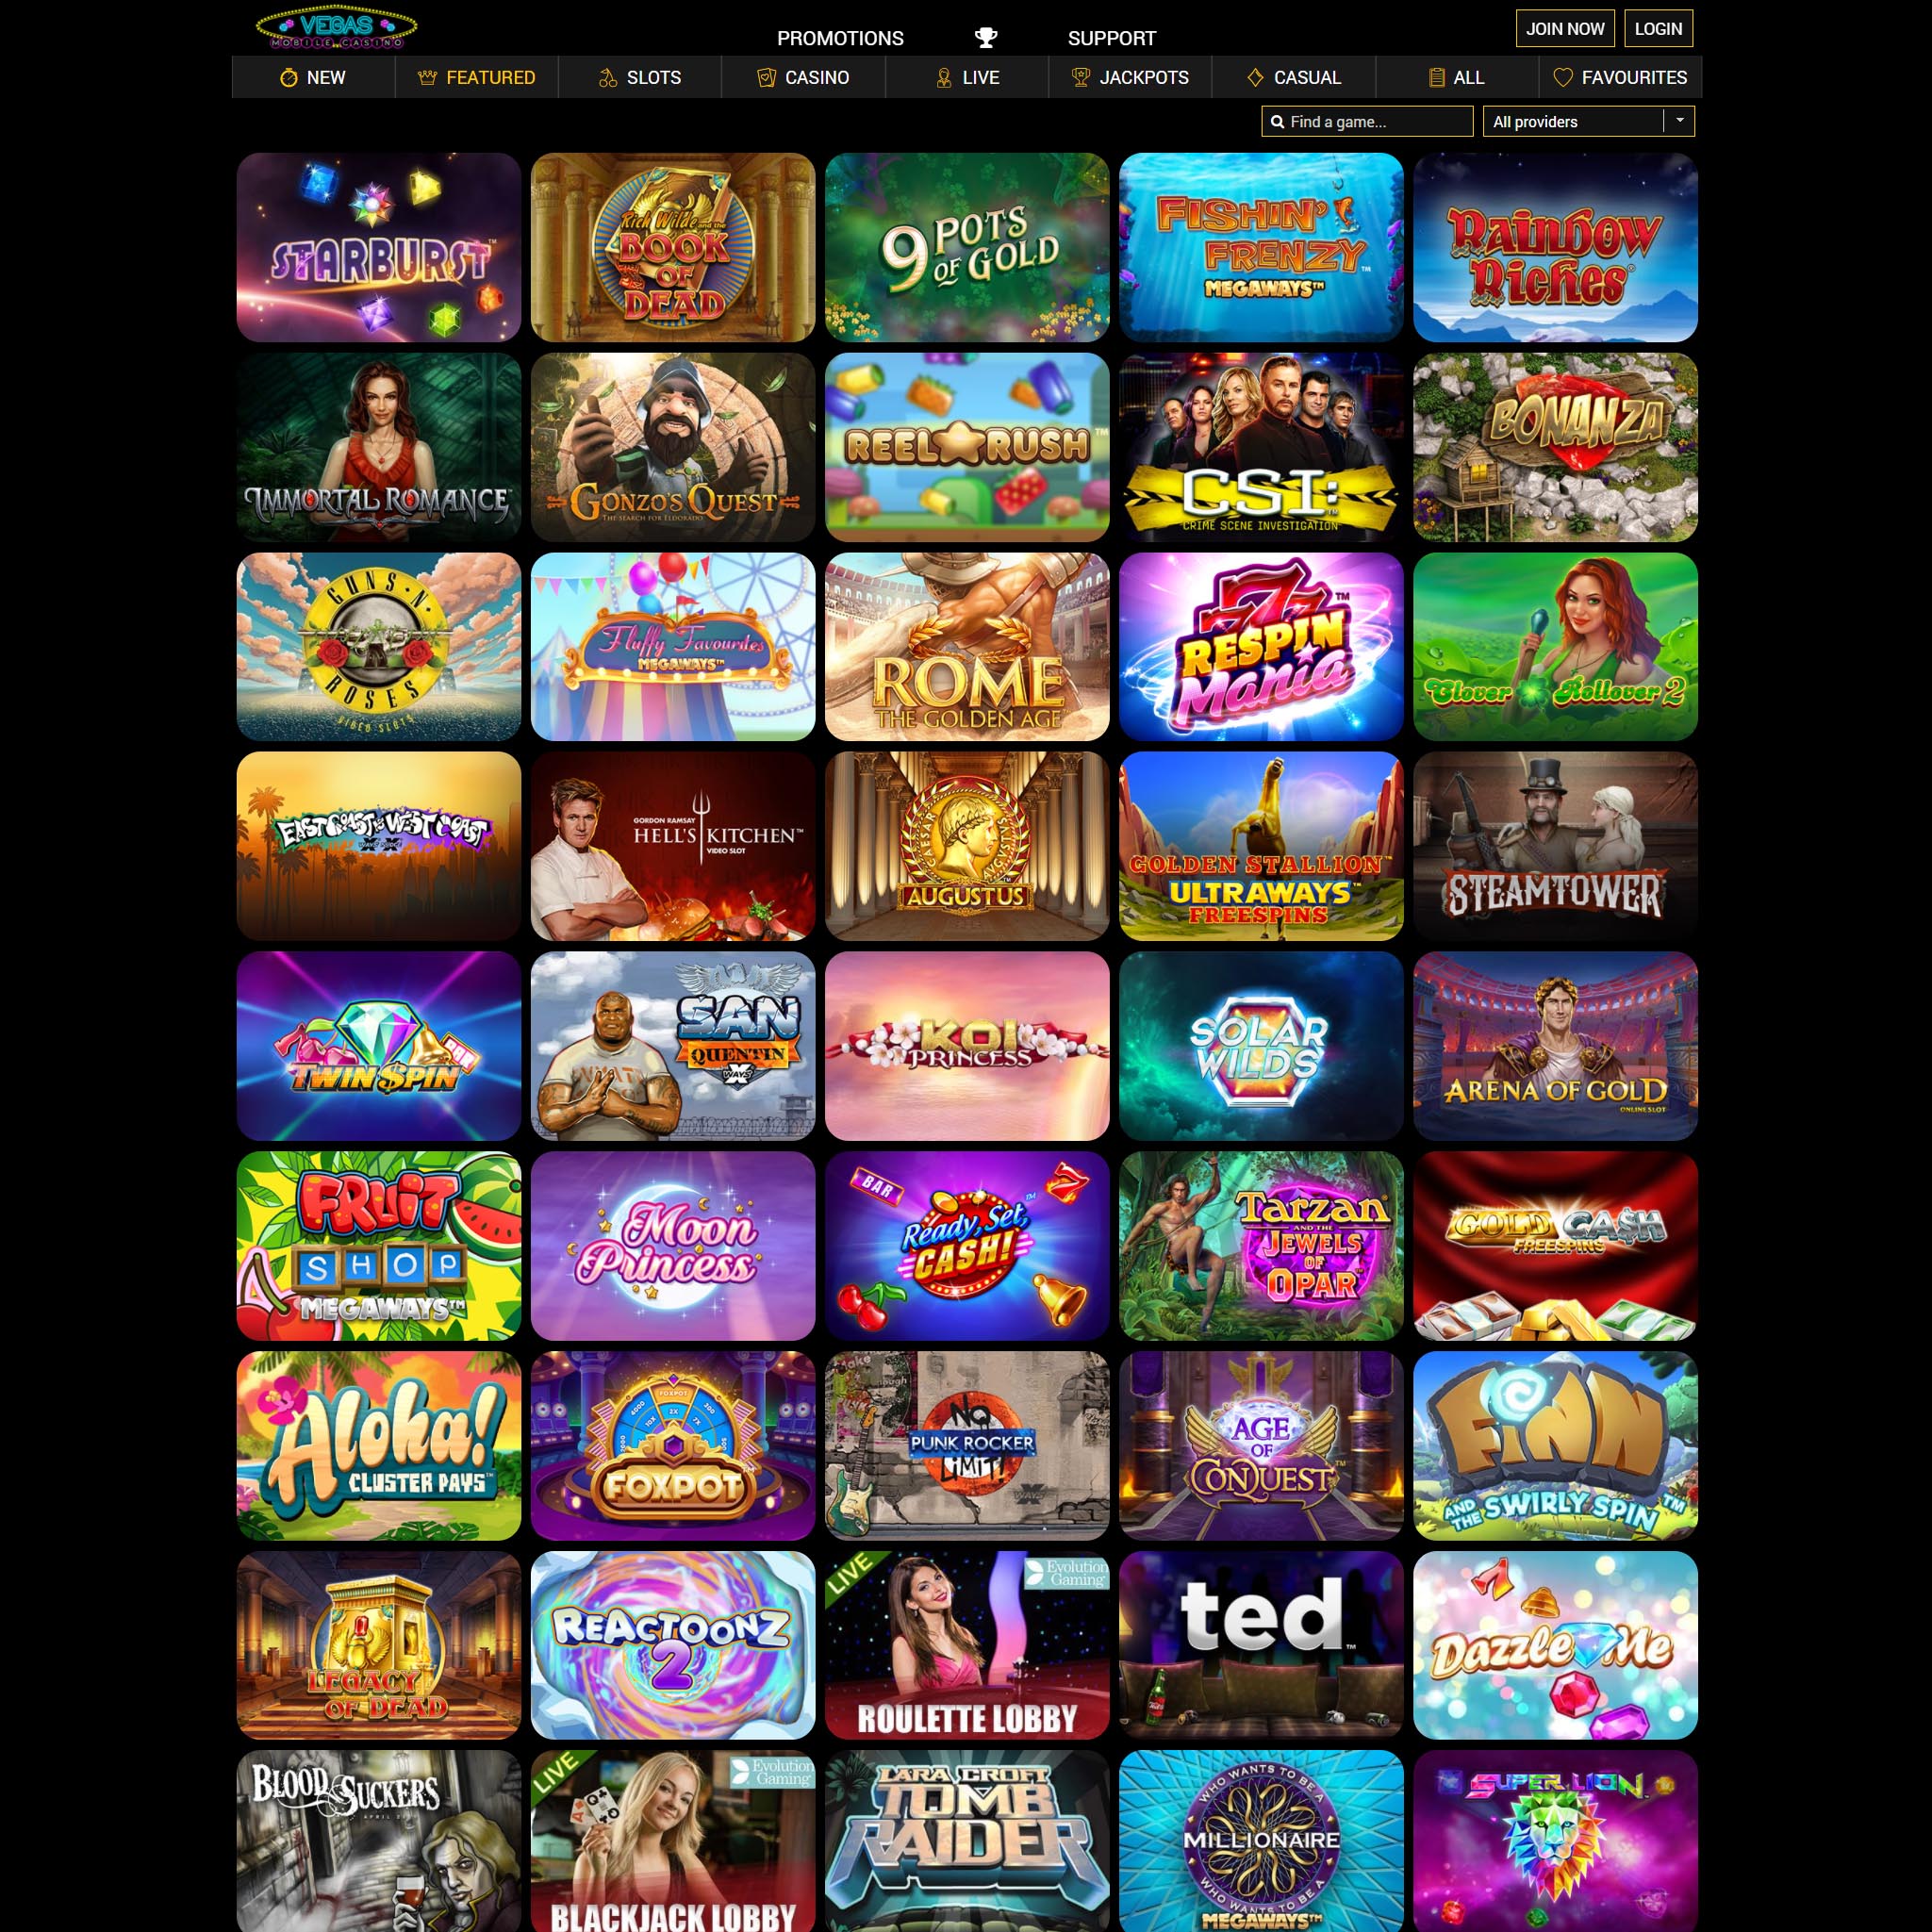 Vegas Mobile Casino full games catalogue